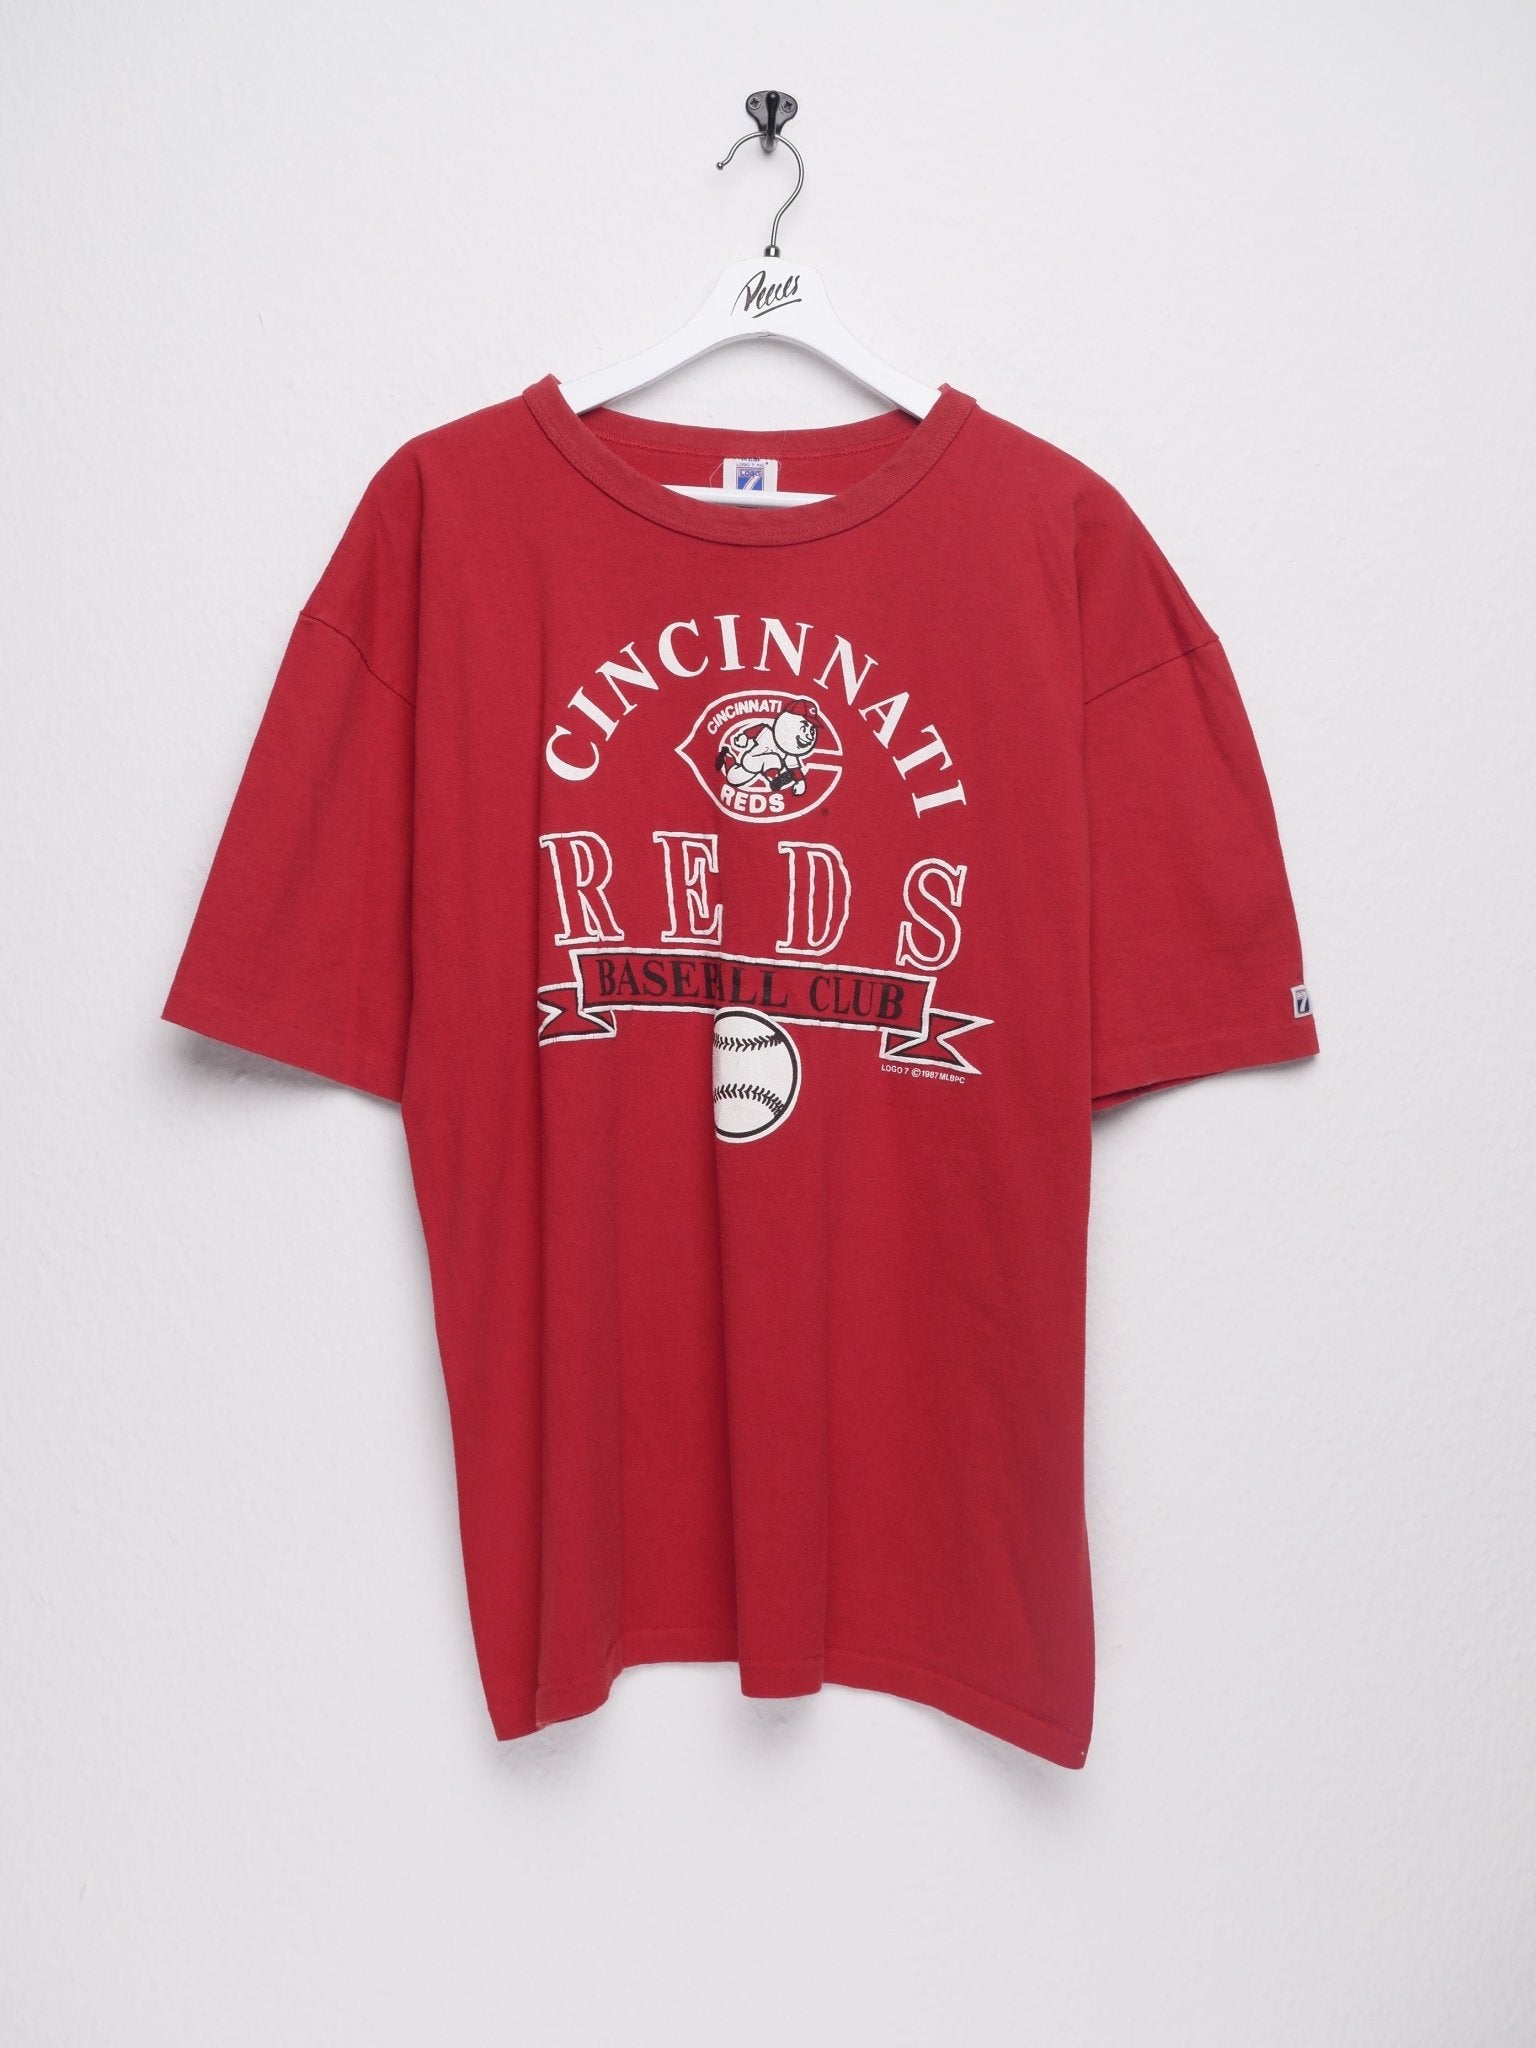 MLB Cincinnati Reds 1987 printed Logo Vintage Shirt - Peeces